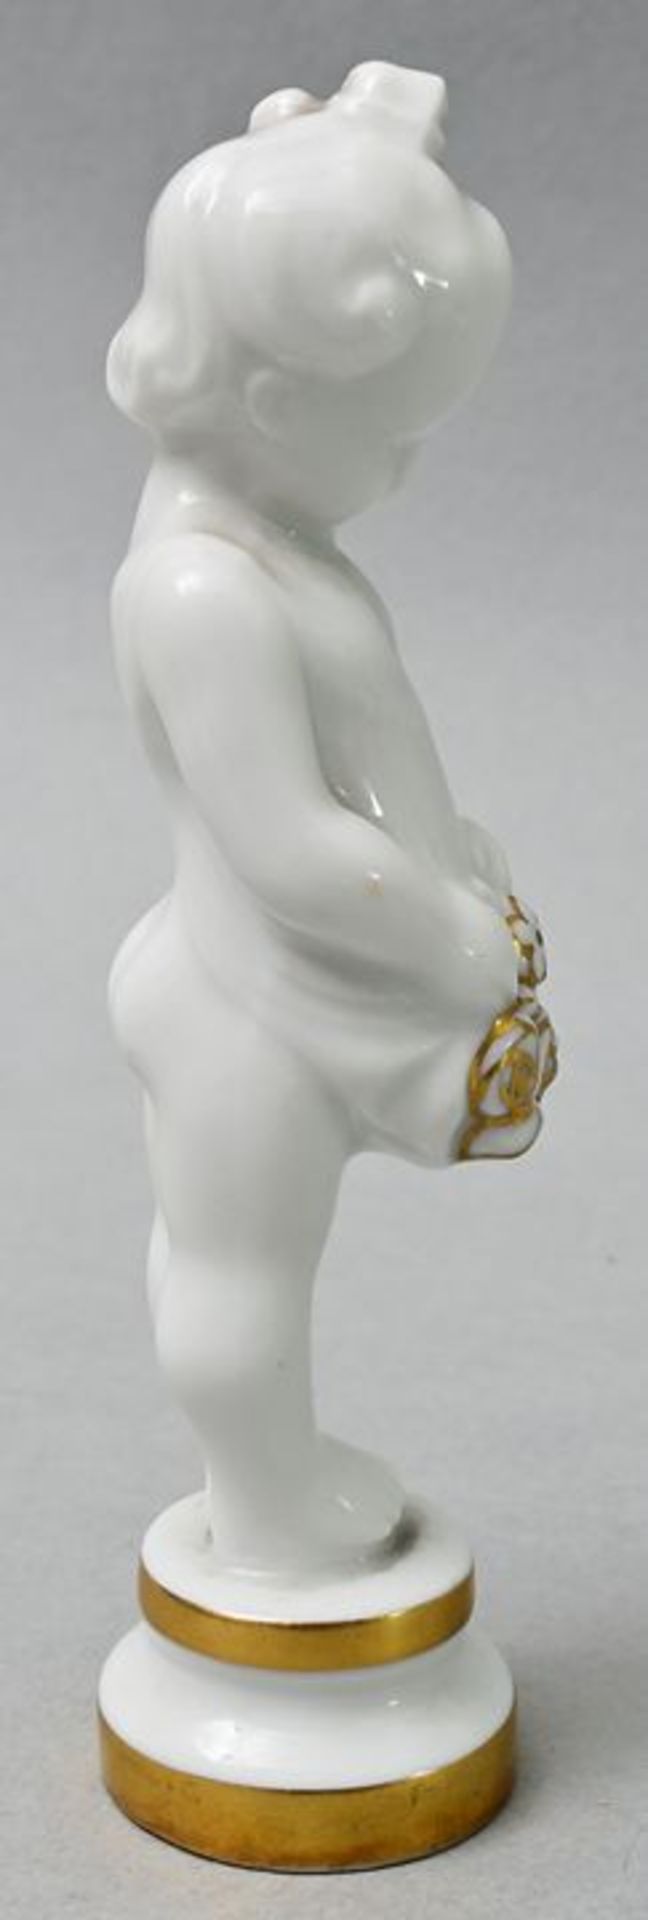 Porzellanfigürchen/ small porcelain figure - Image 2 of 5